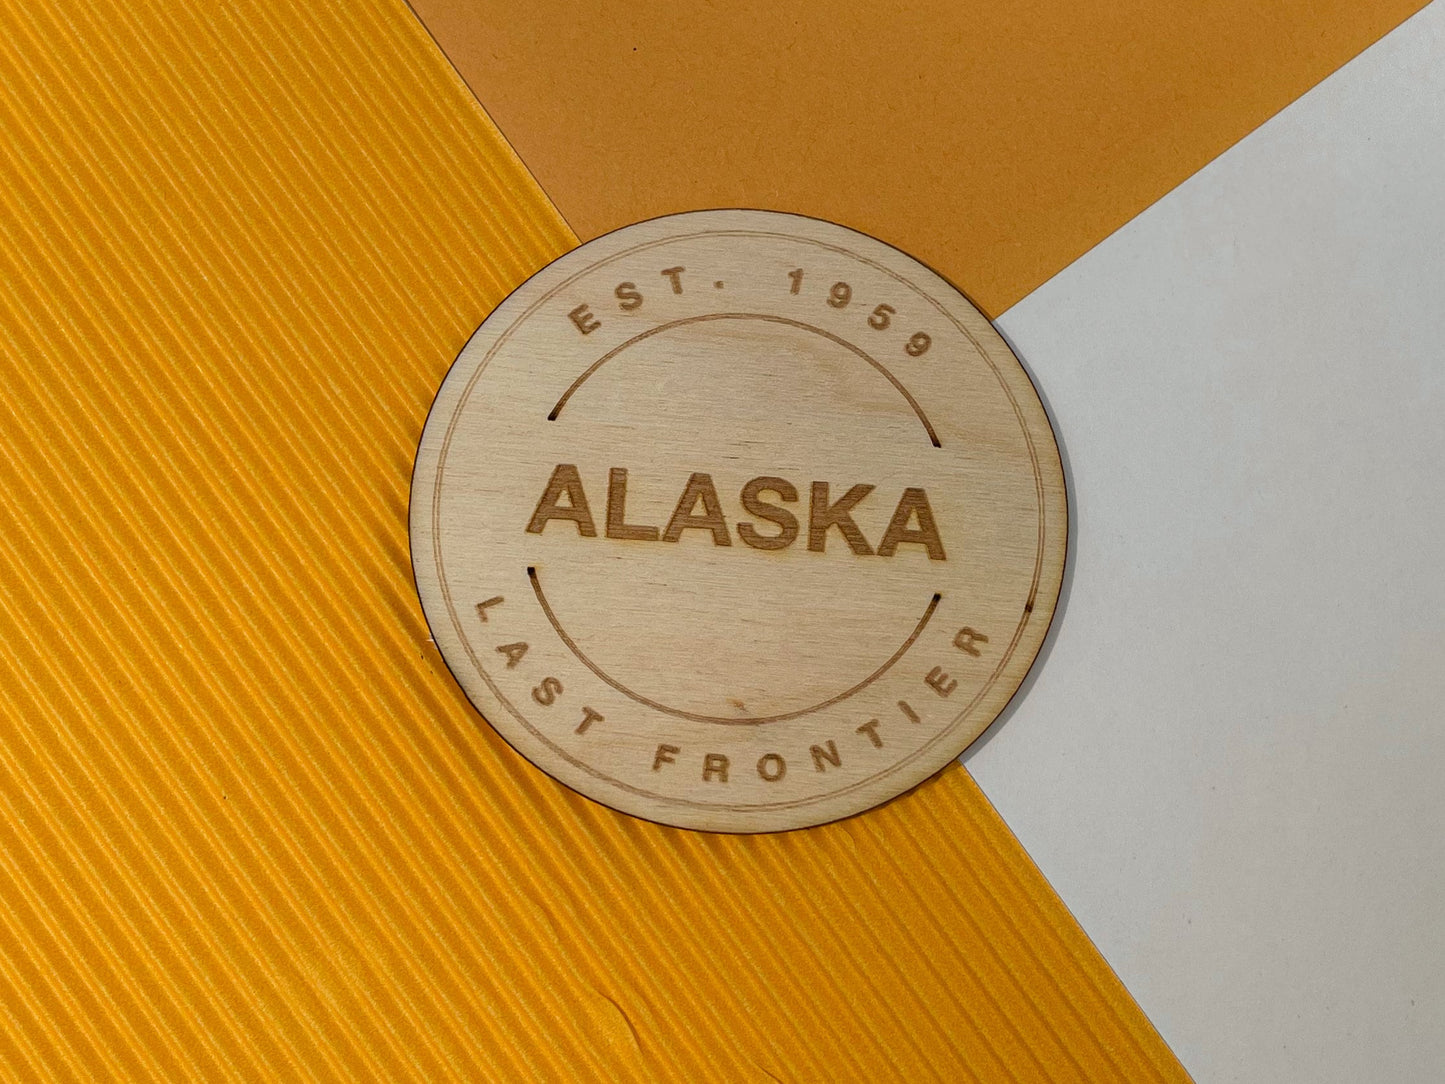 Alaska State Token Magnet